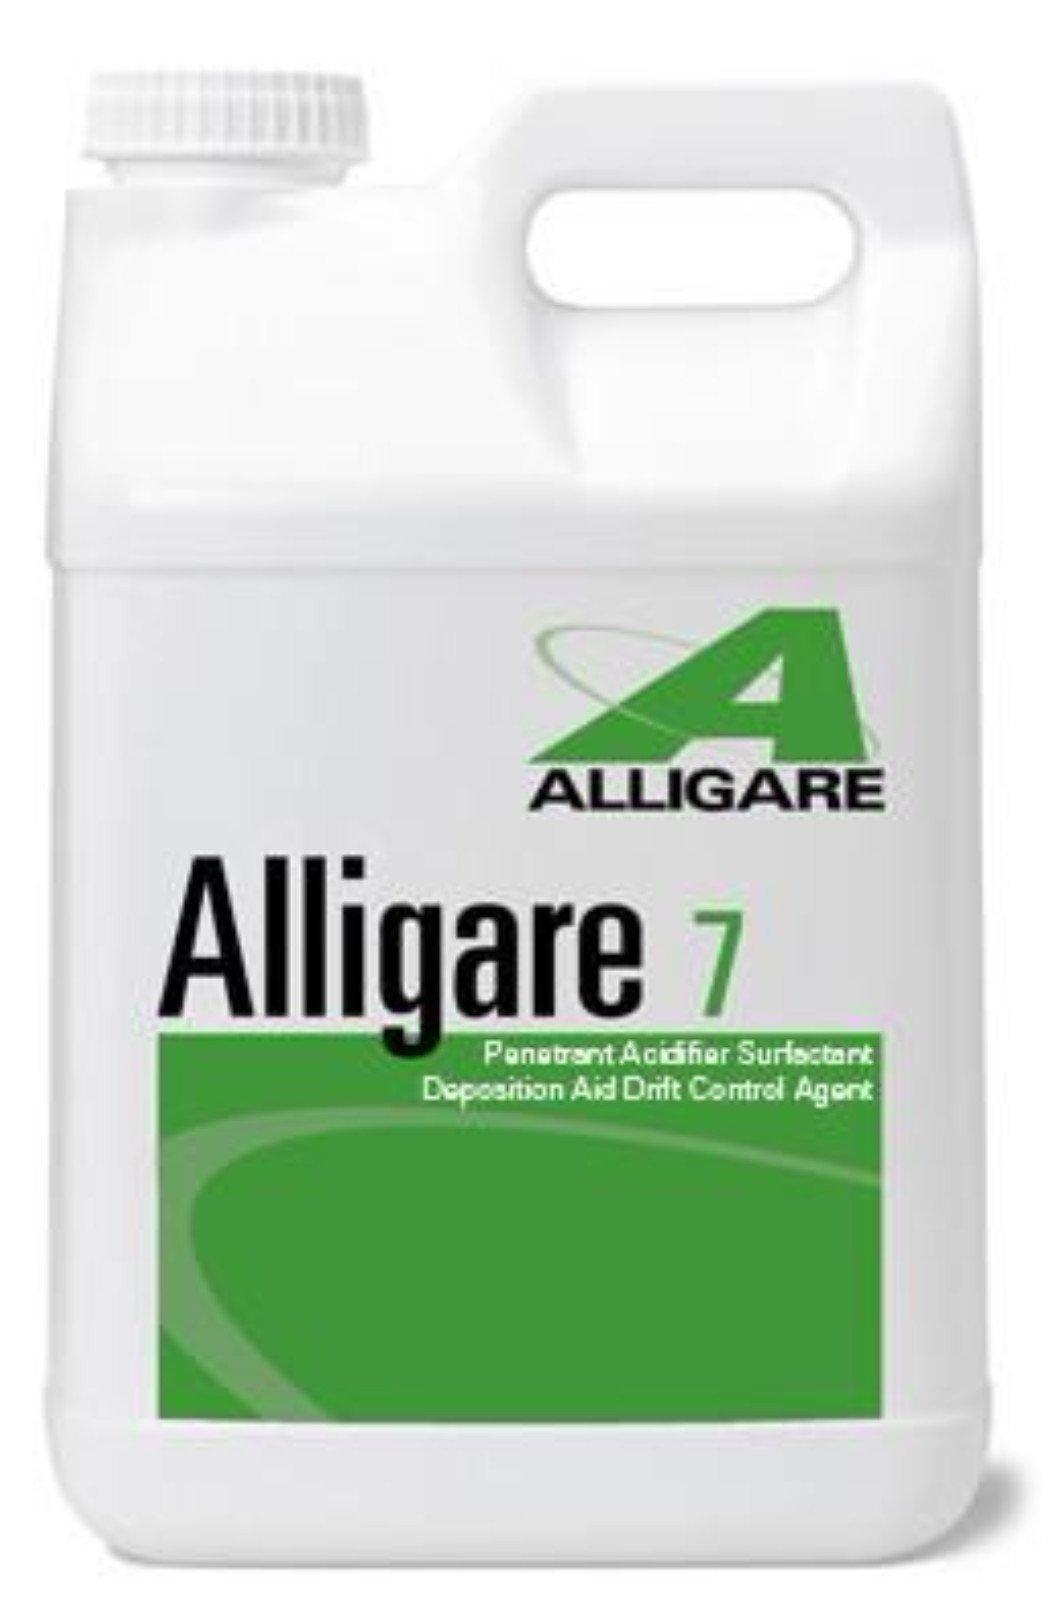 Surfactant - Alligare 7 Non-Ionic Surfactant For Pesticides